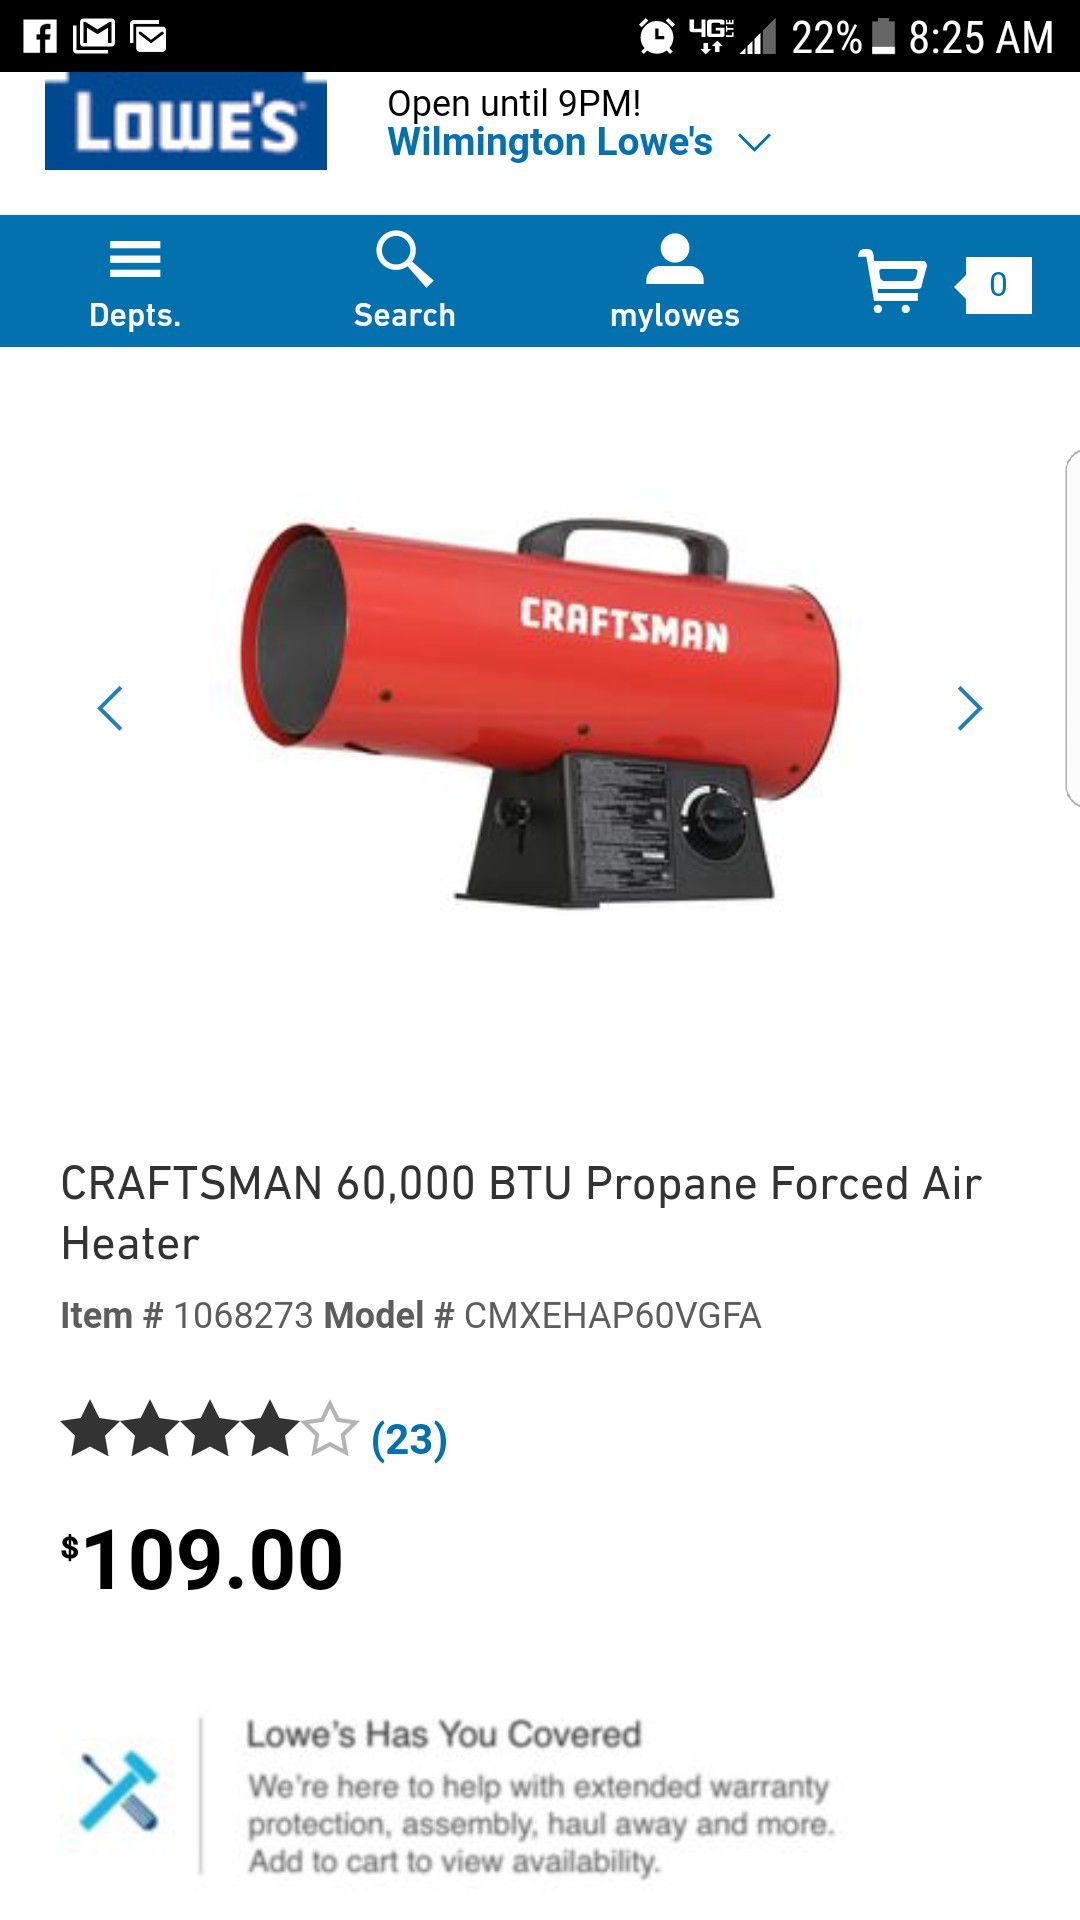 Craftsman propane heater